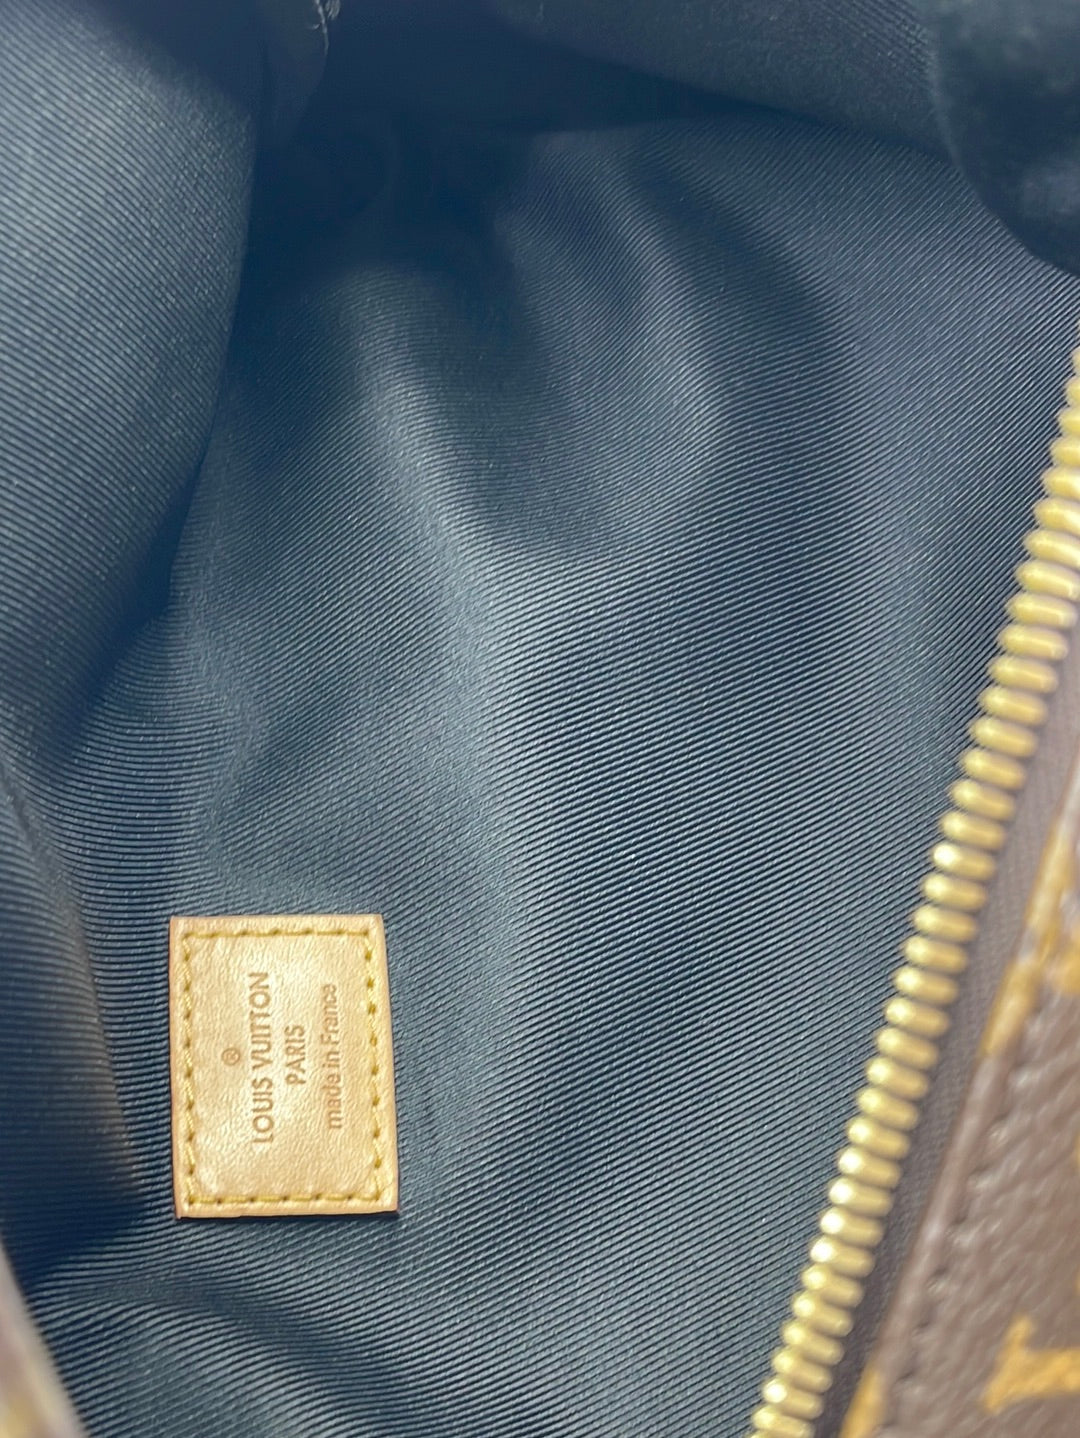 Vuitton - Neverfull - Pouch - owned Tilsitt bum bag - For - Louis -  Кросівки louis vuitton шкіряні - Damier - GM – Louis Vuitton pre - MM